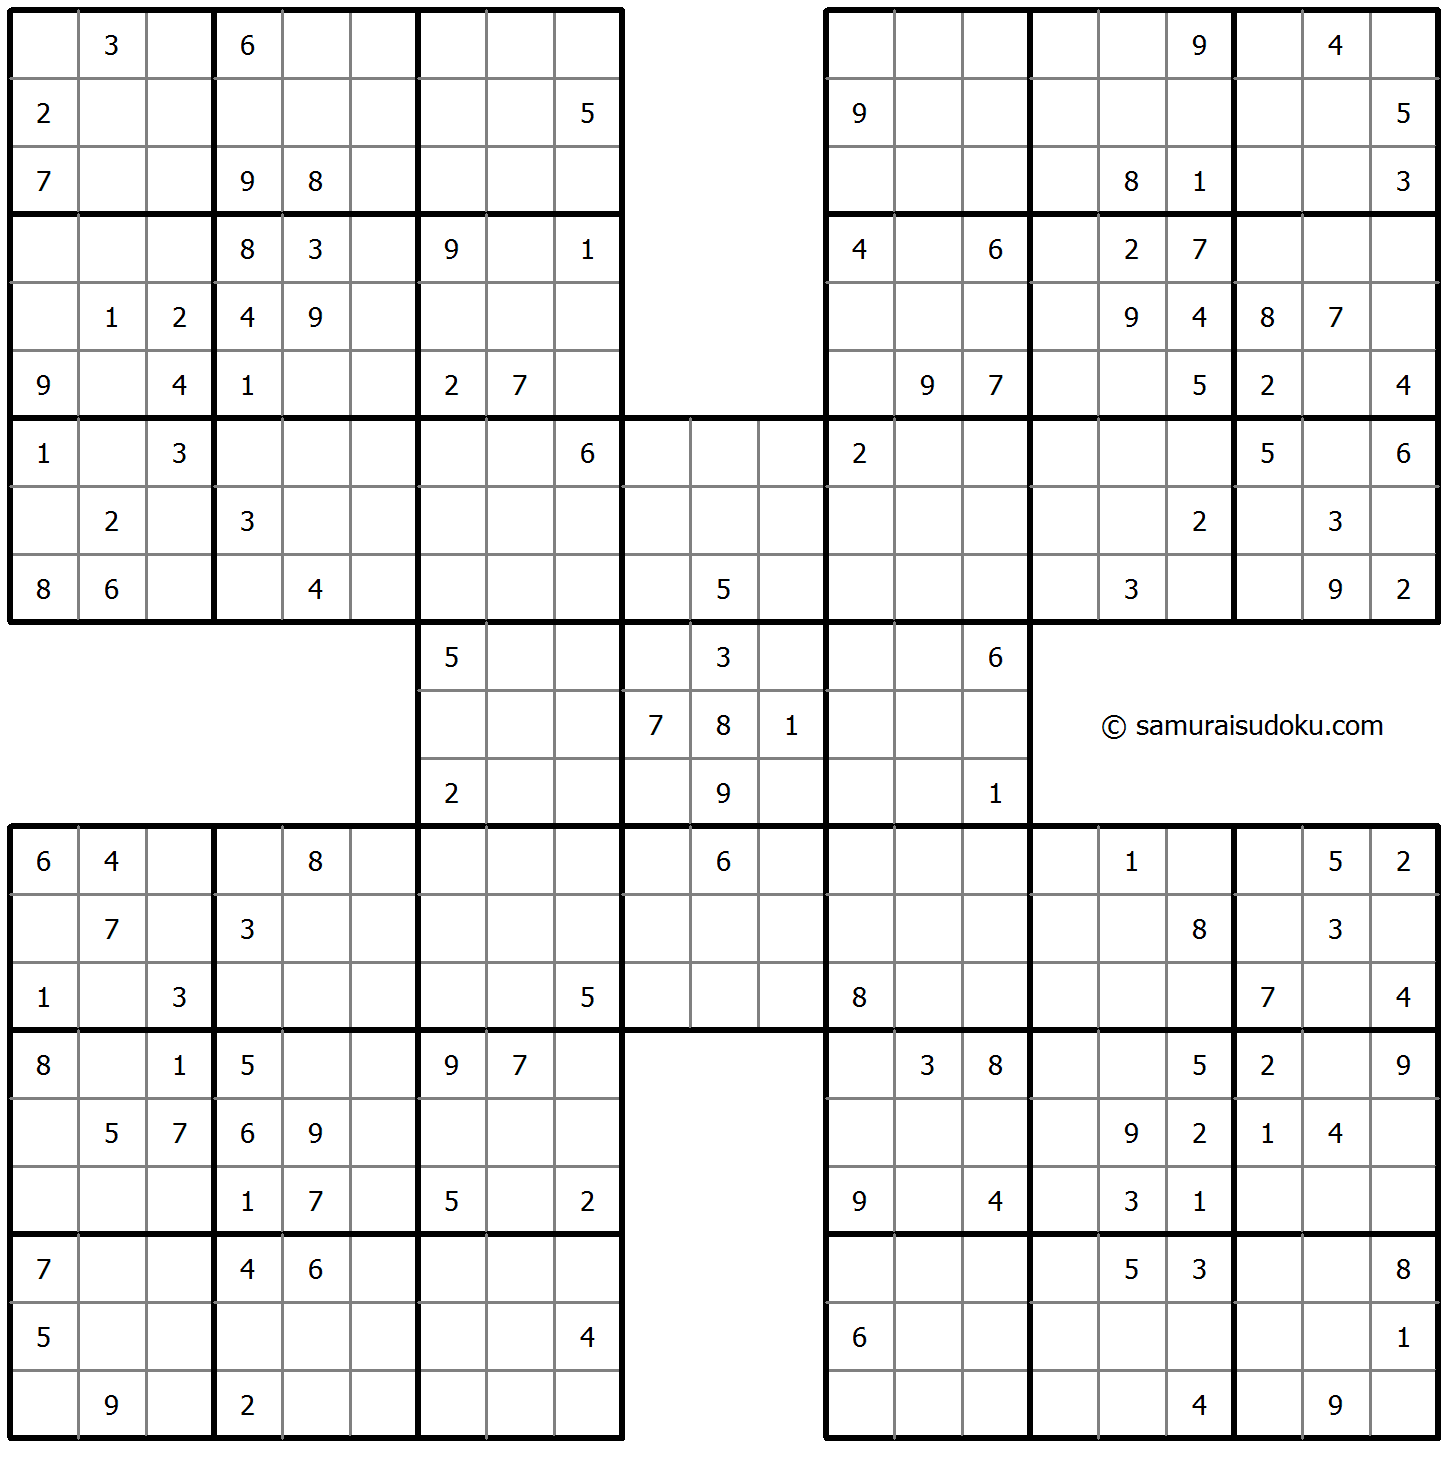 Samurai Sudoku 24-February-2022